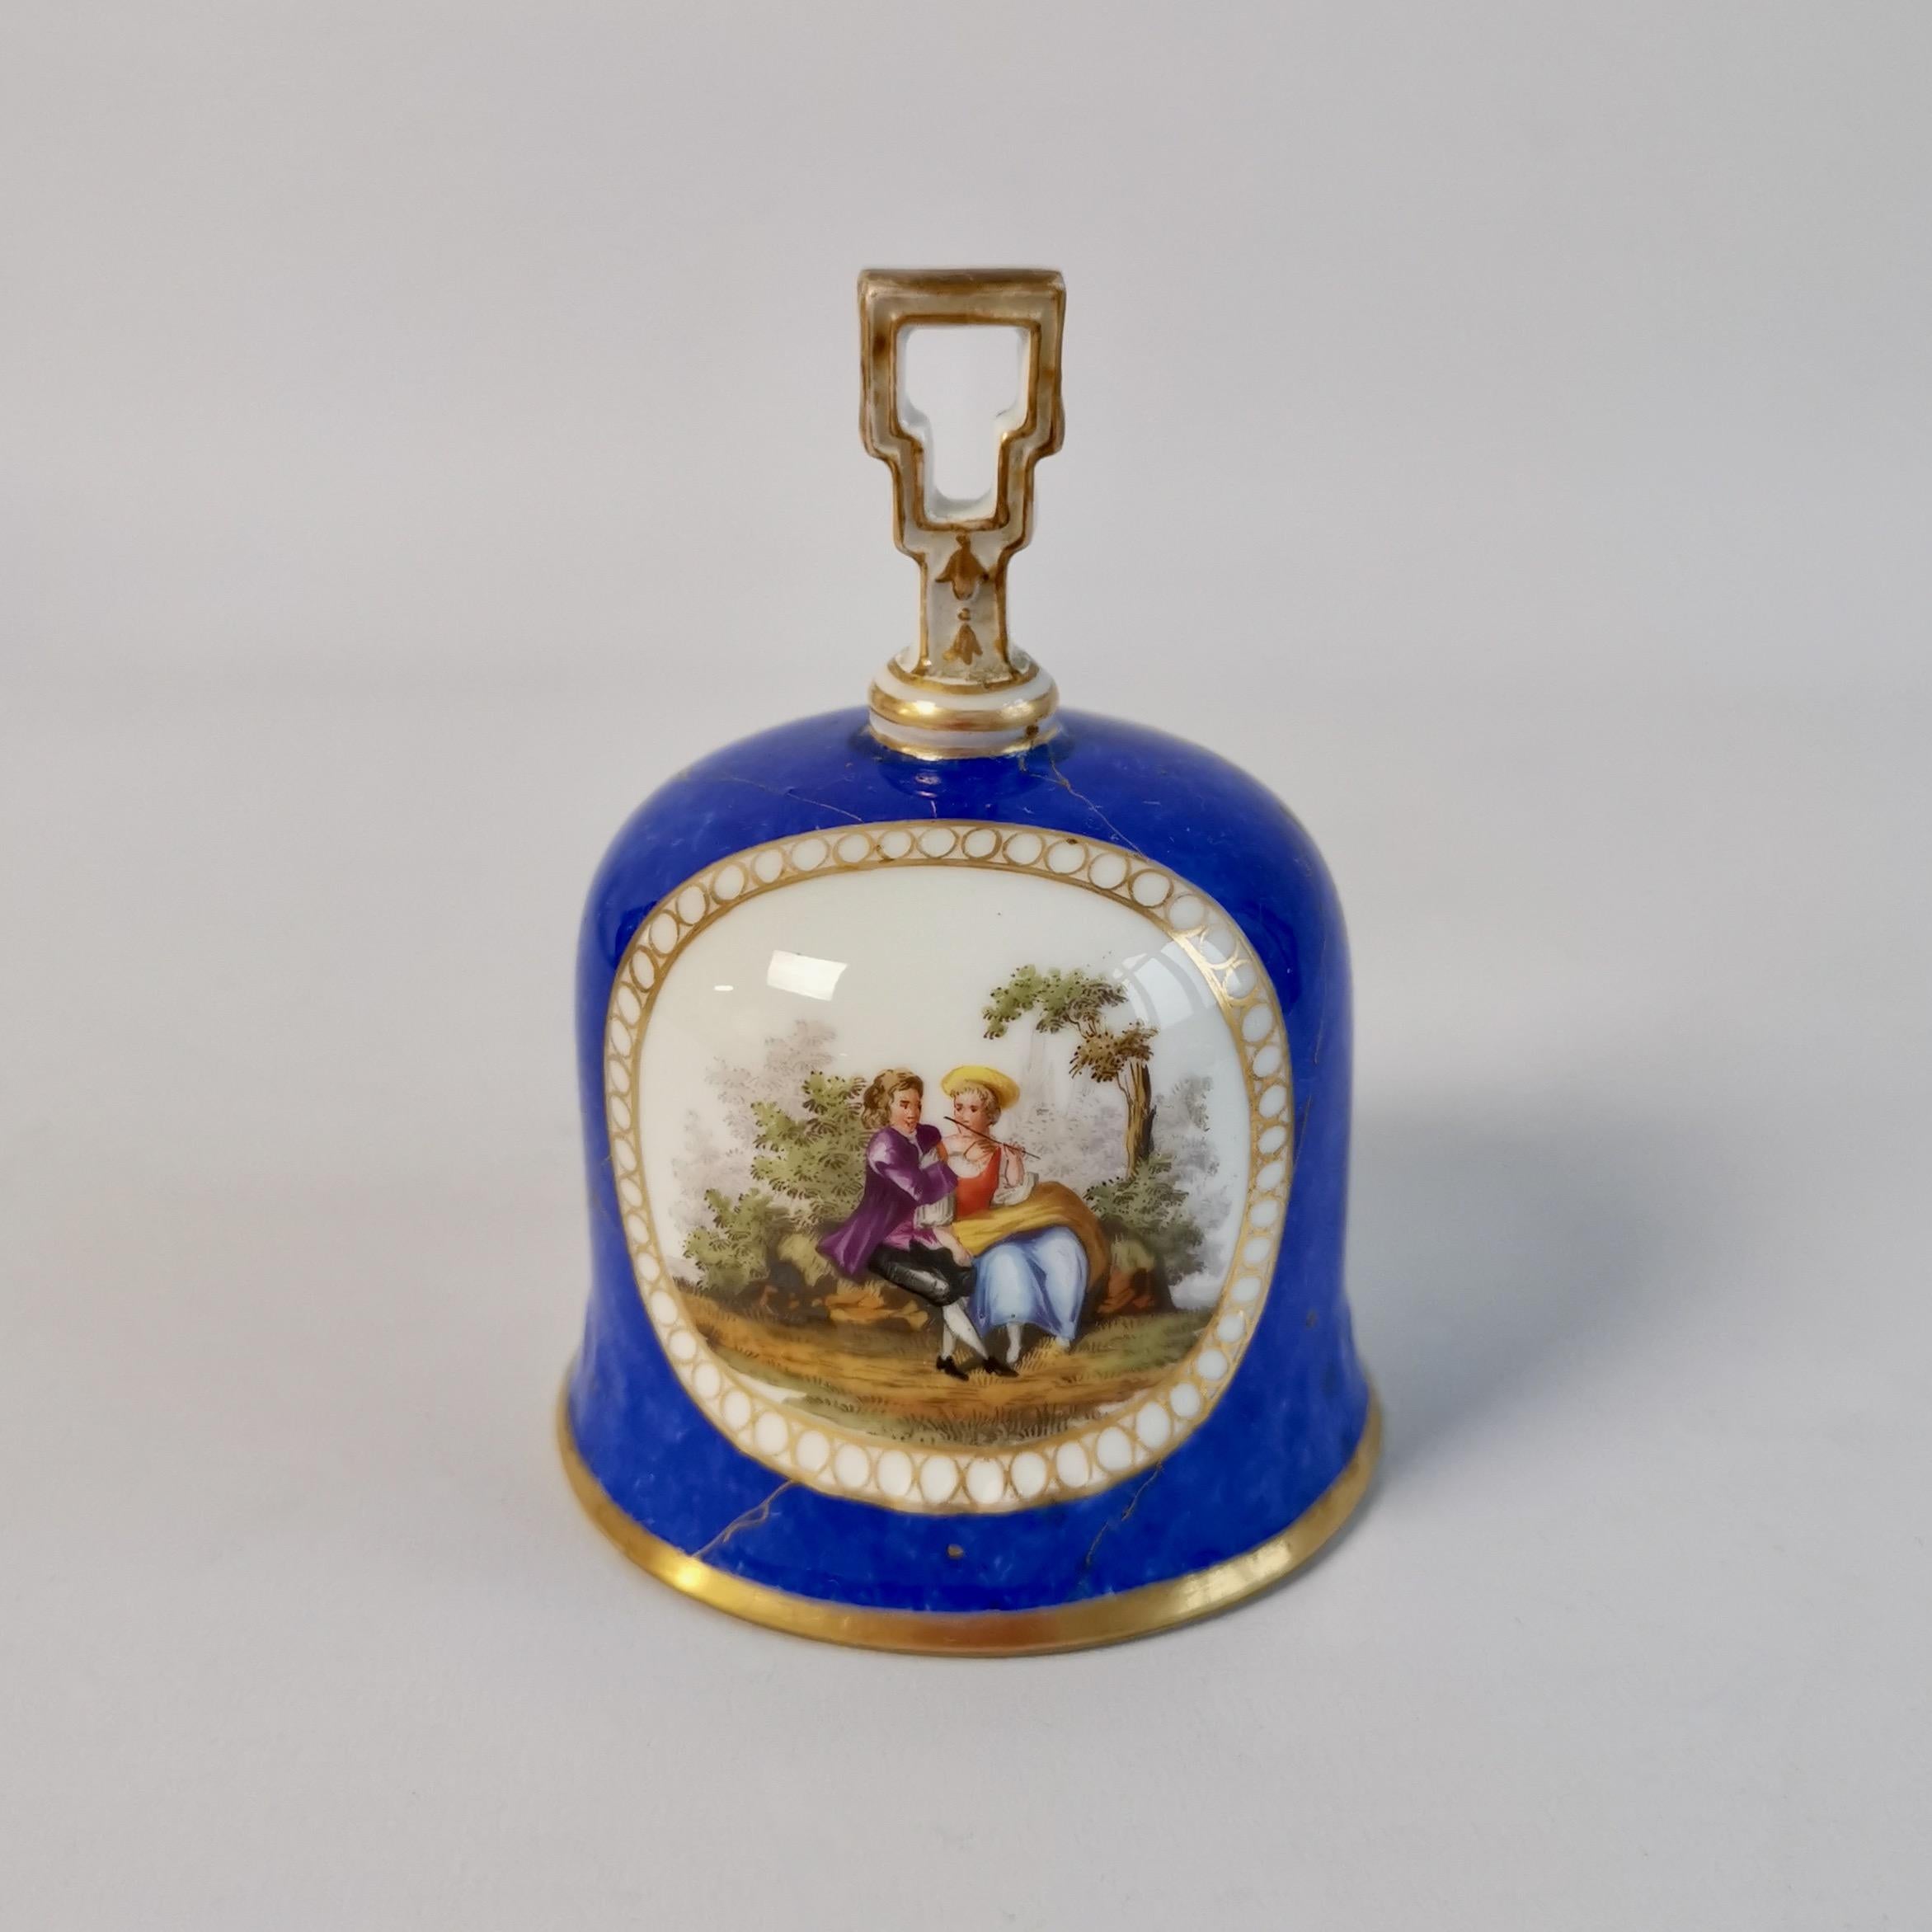 German Meissen Porcelain Table Bell, Blue with Romantic Scenes, 19th C